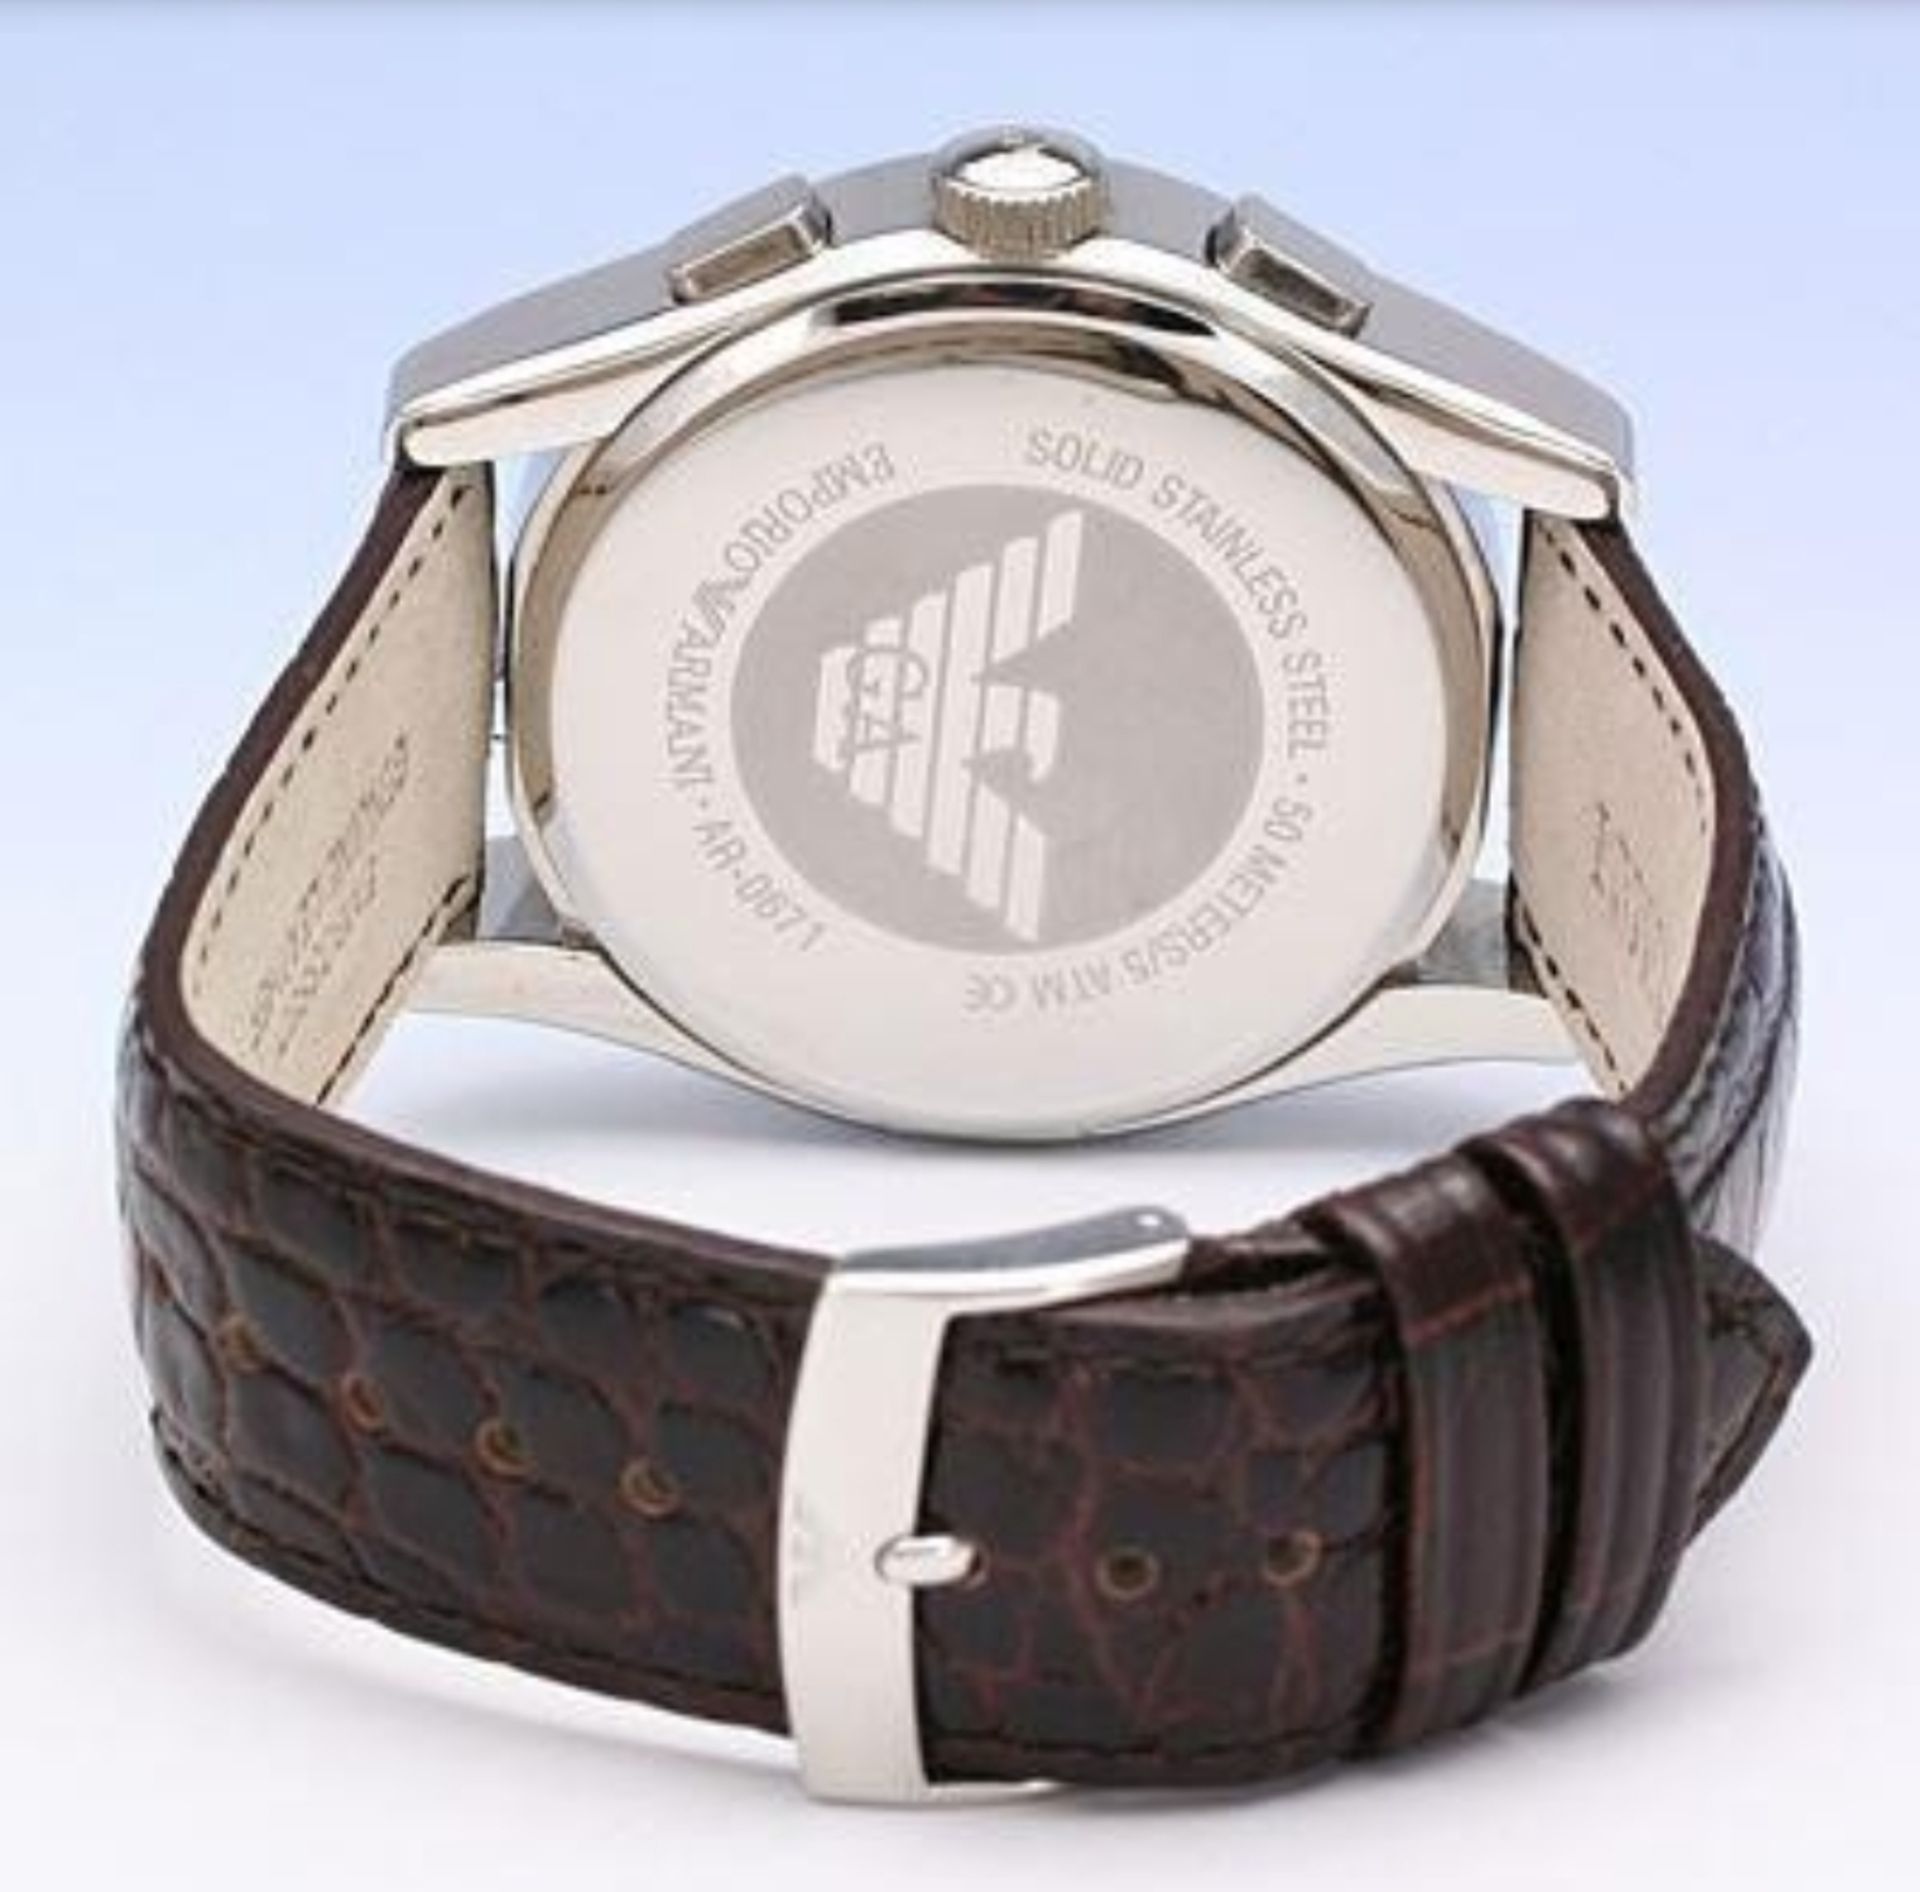 Emporio Armani AR0671 Men's Brown Leather Strap Quartz Chronograph Watch - Image 9 of 10